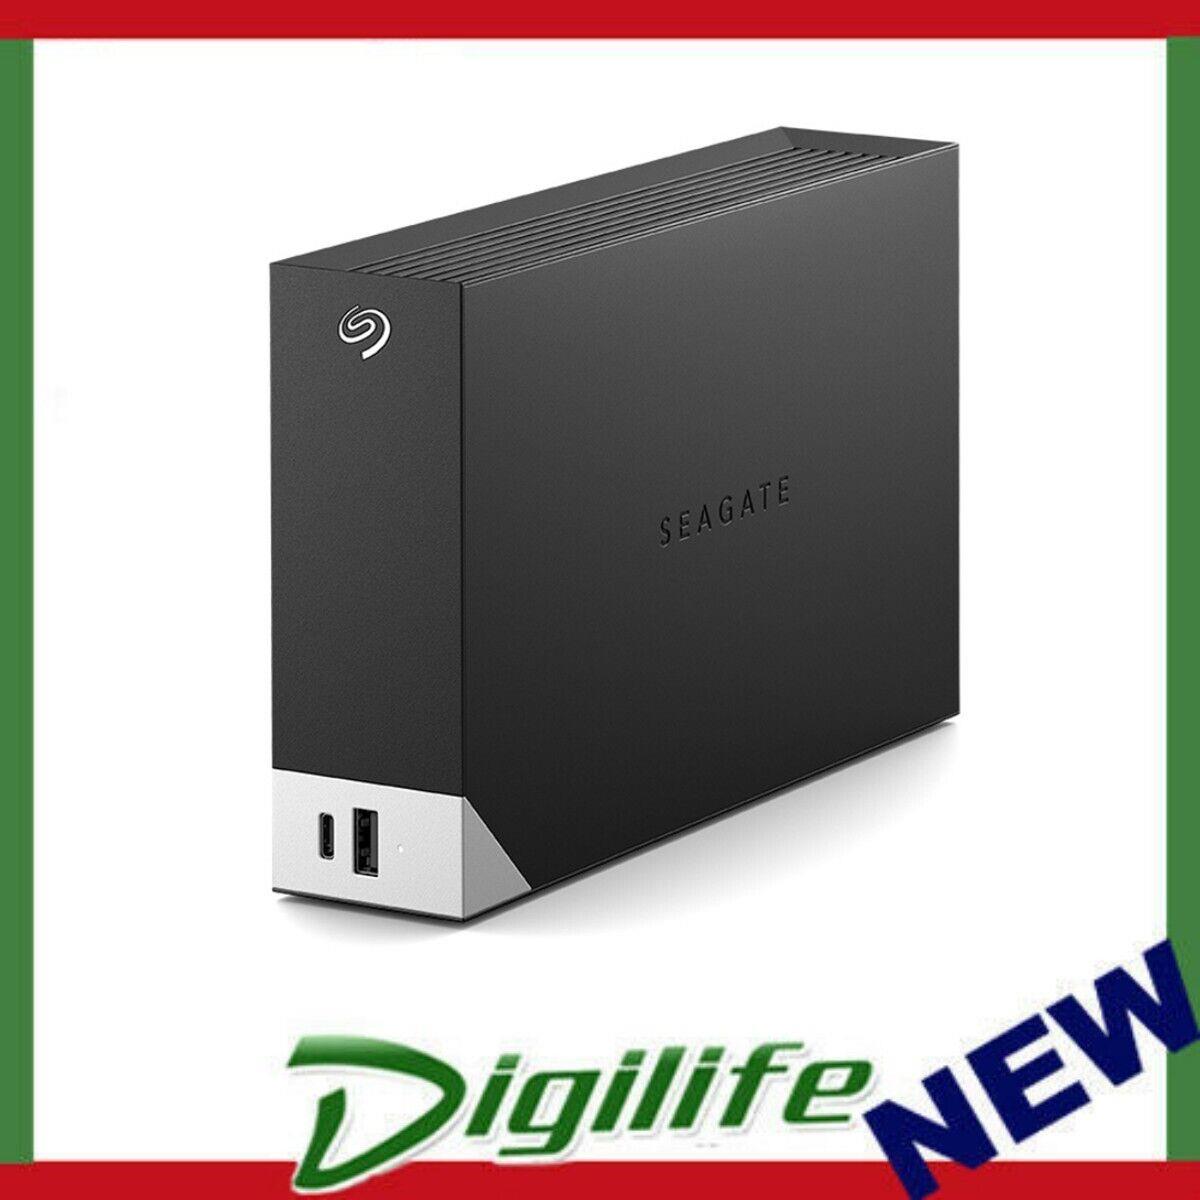 Seagate 12tb One Touch Desktop Hub - Black